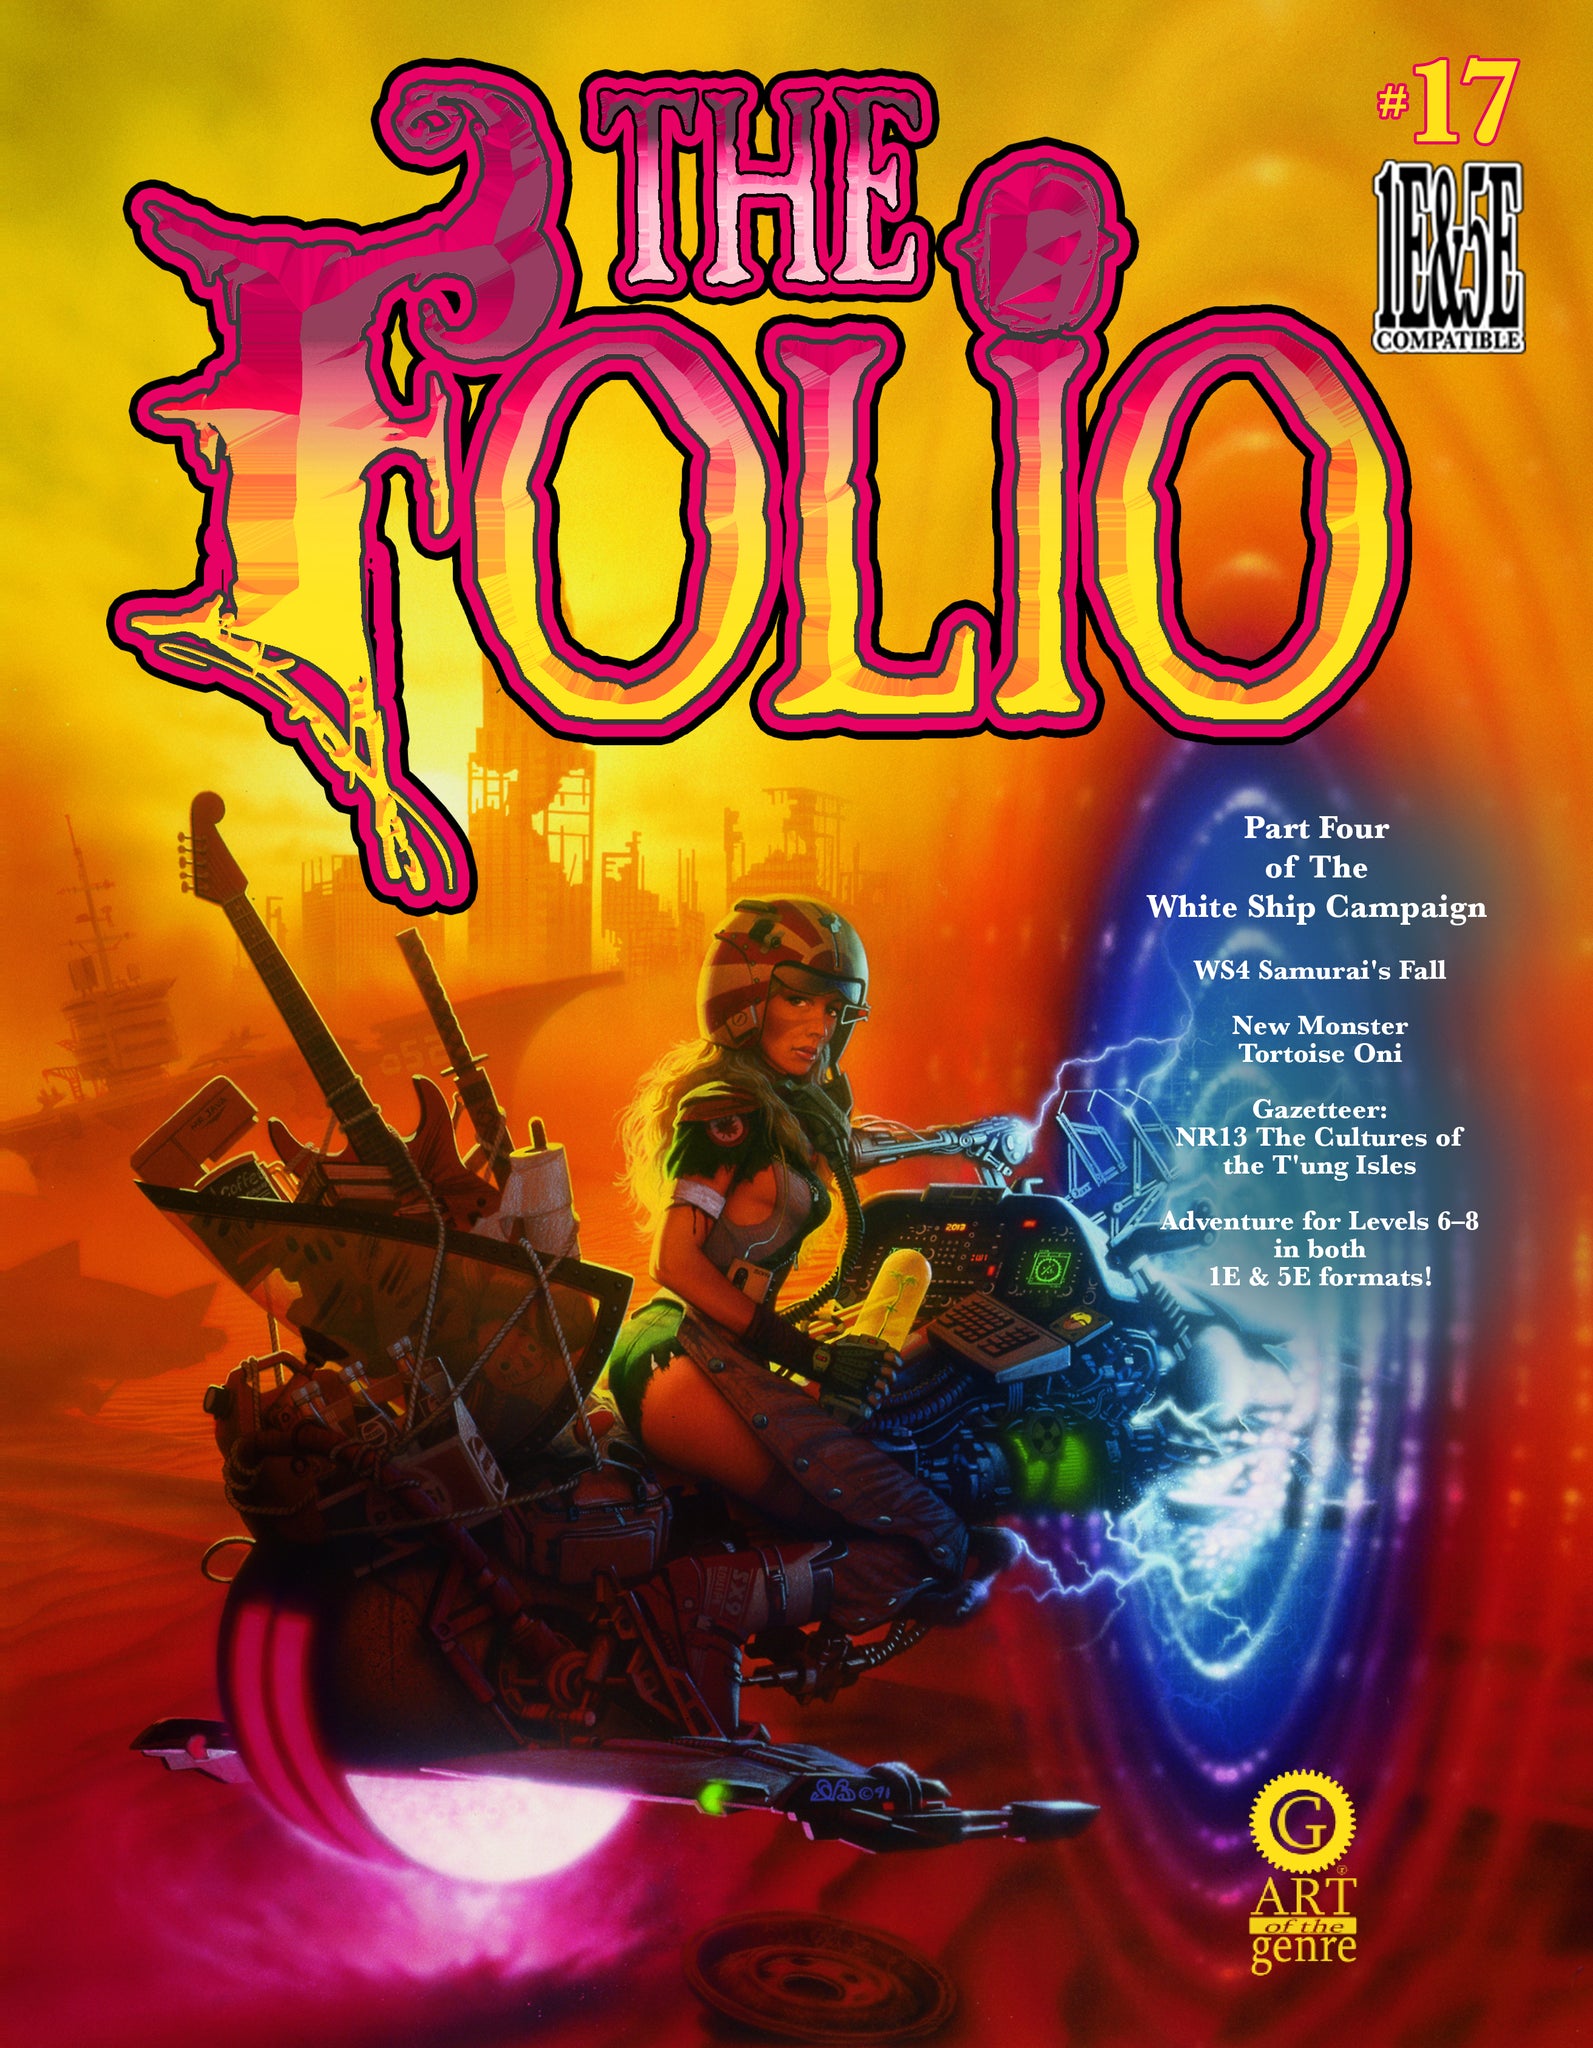 FOLIO #17 [PDF EDITION]